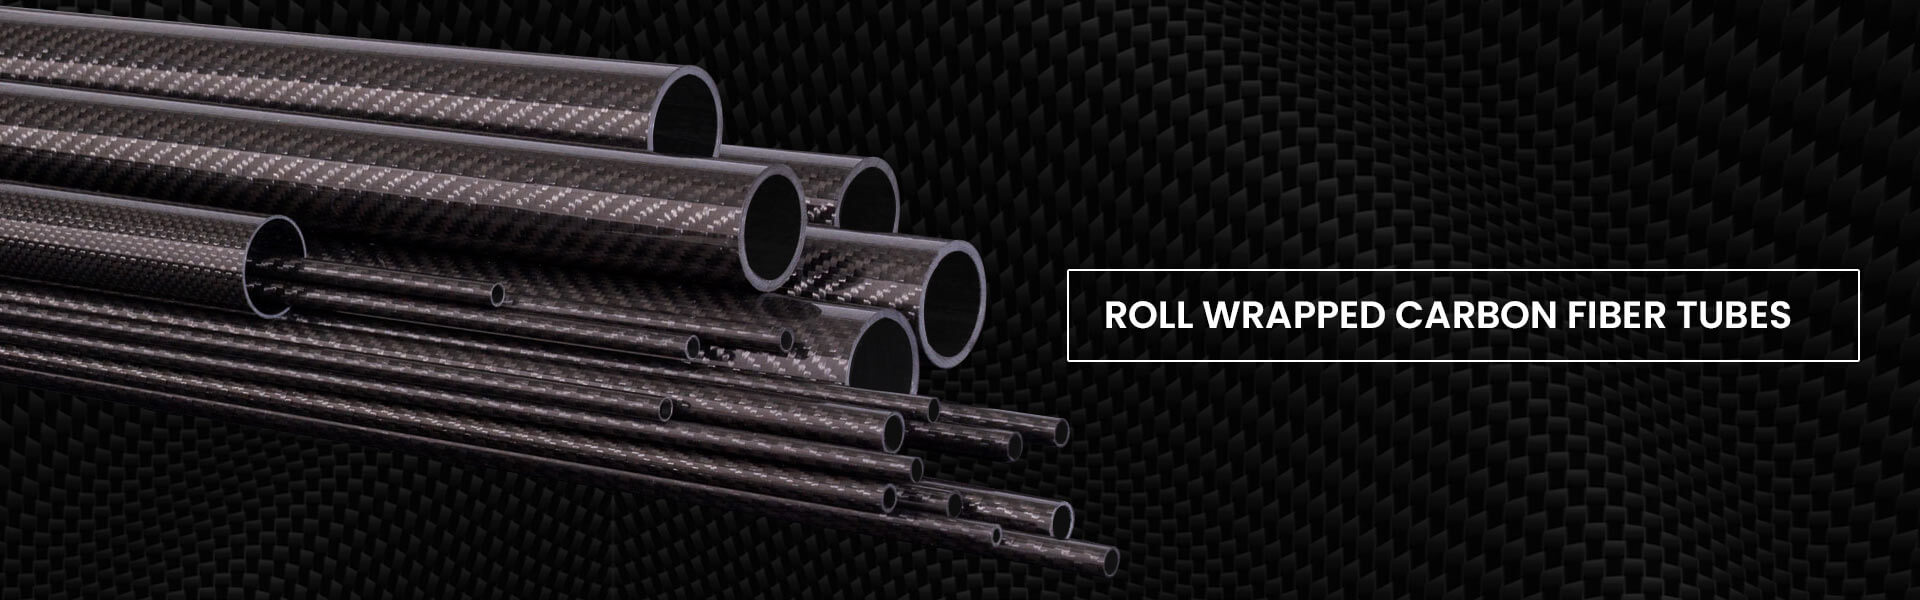 Roll Wrapped Carbon Fiber Tubes | Prepreg Carbon Fiber Tubes| NitPro Composites